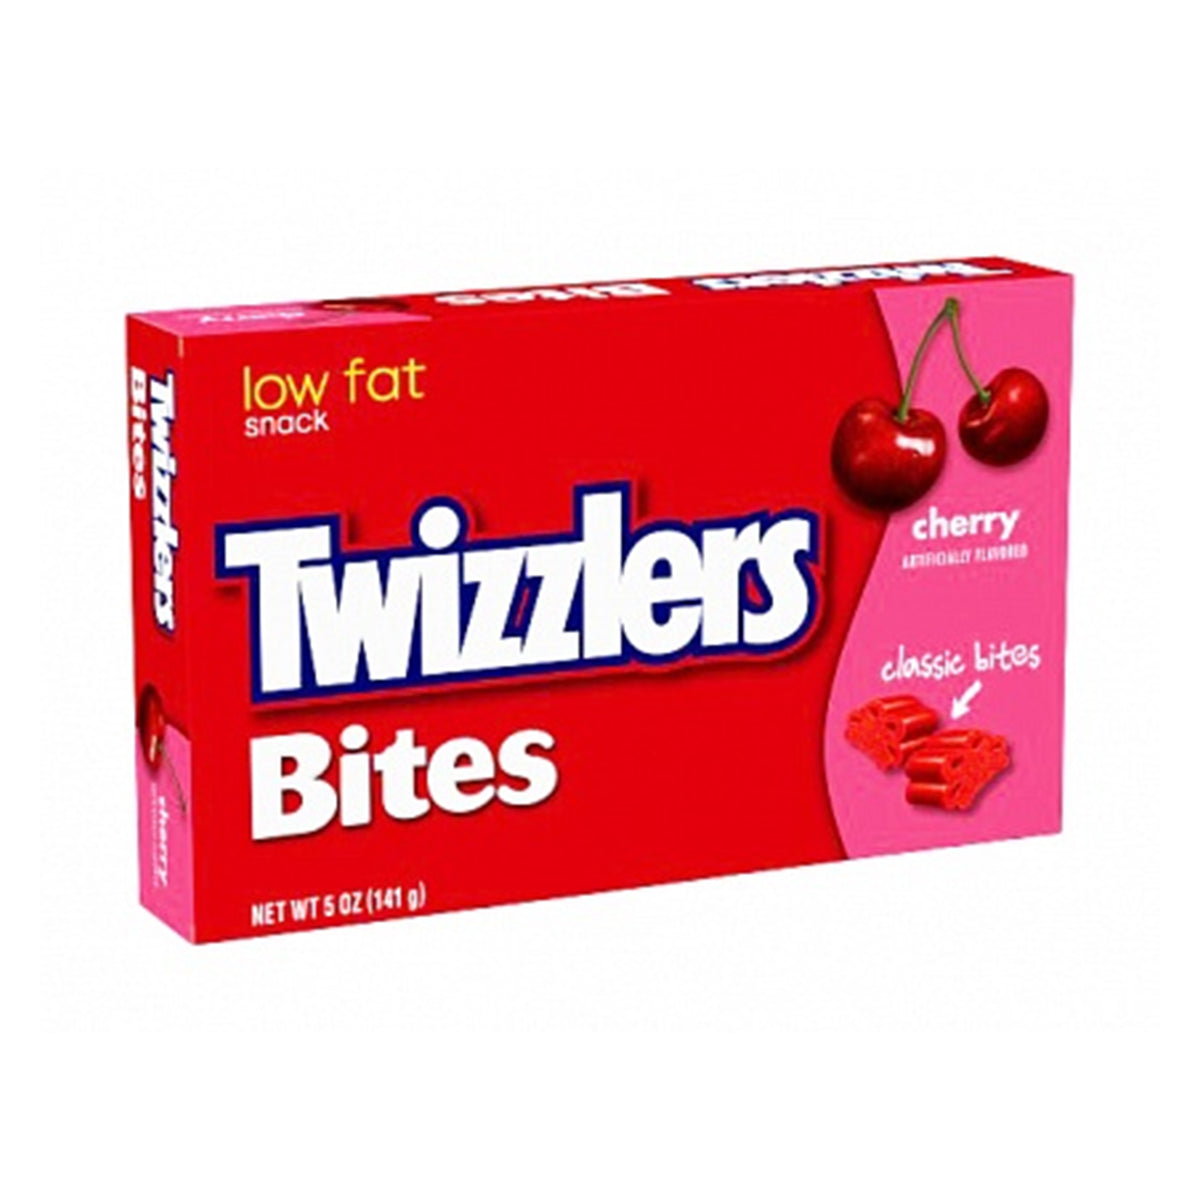 TWIZZLERS Cherry Flavored Bites